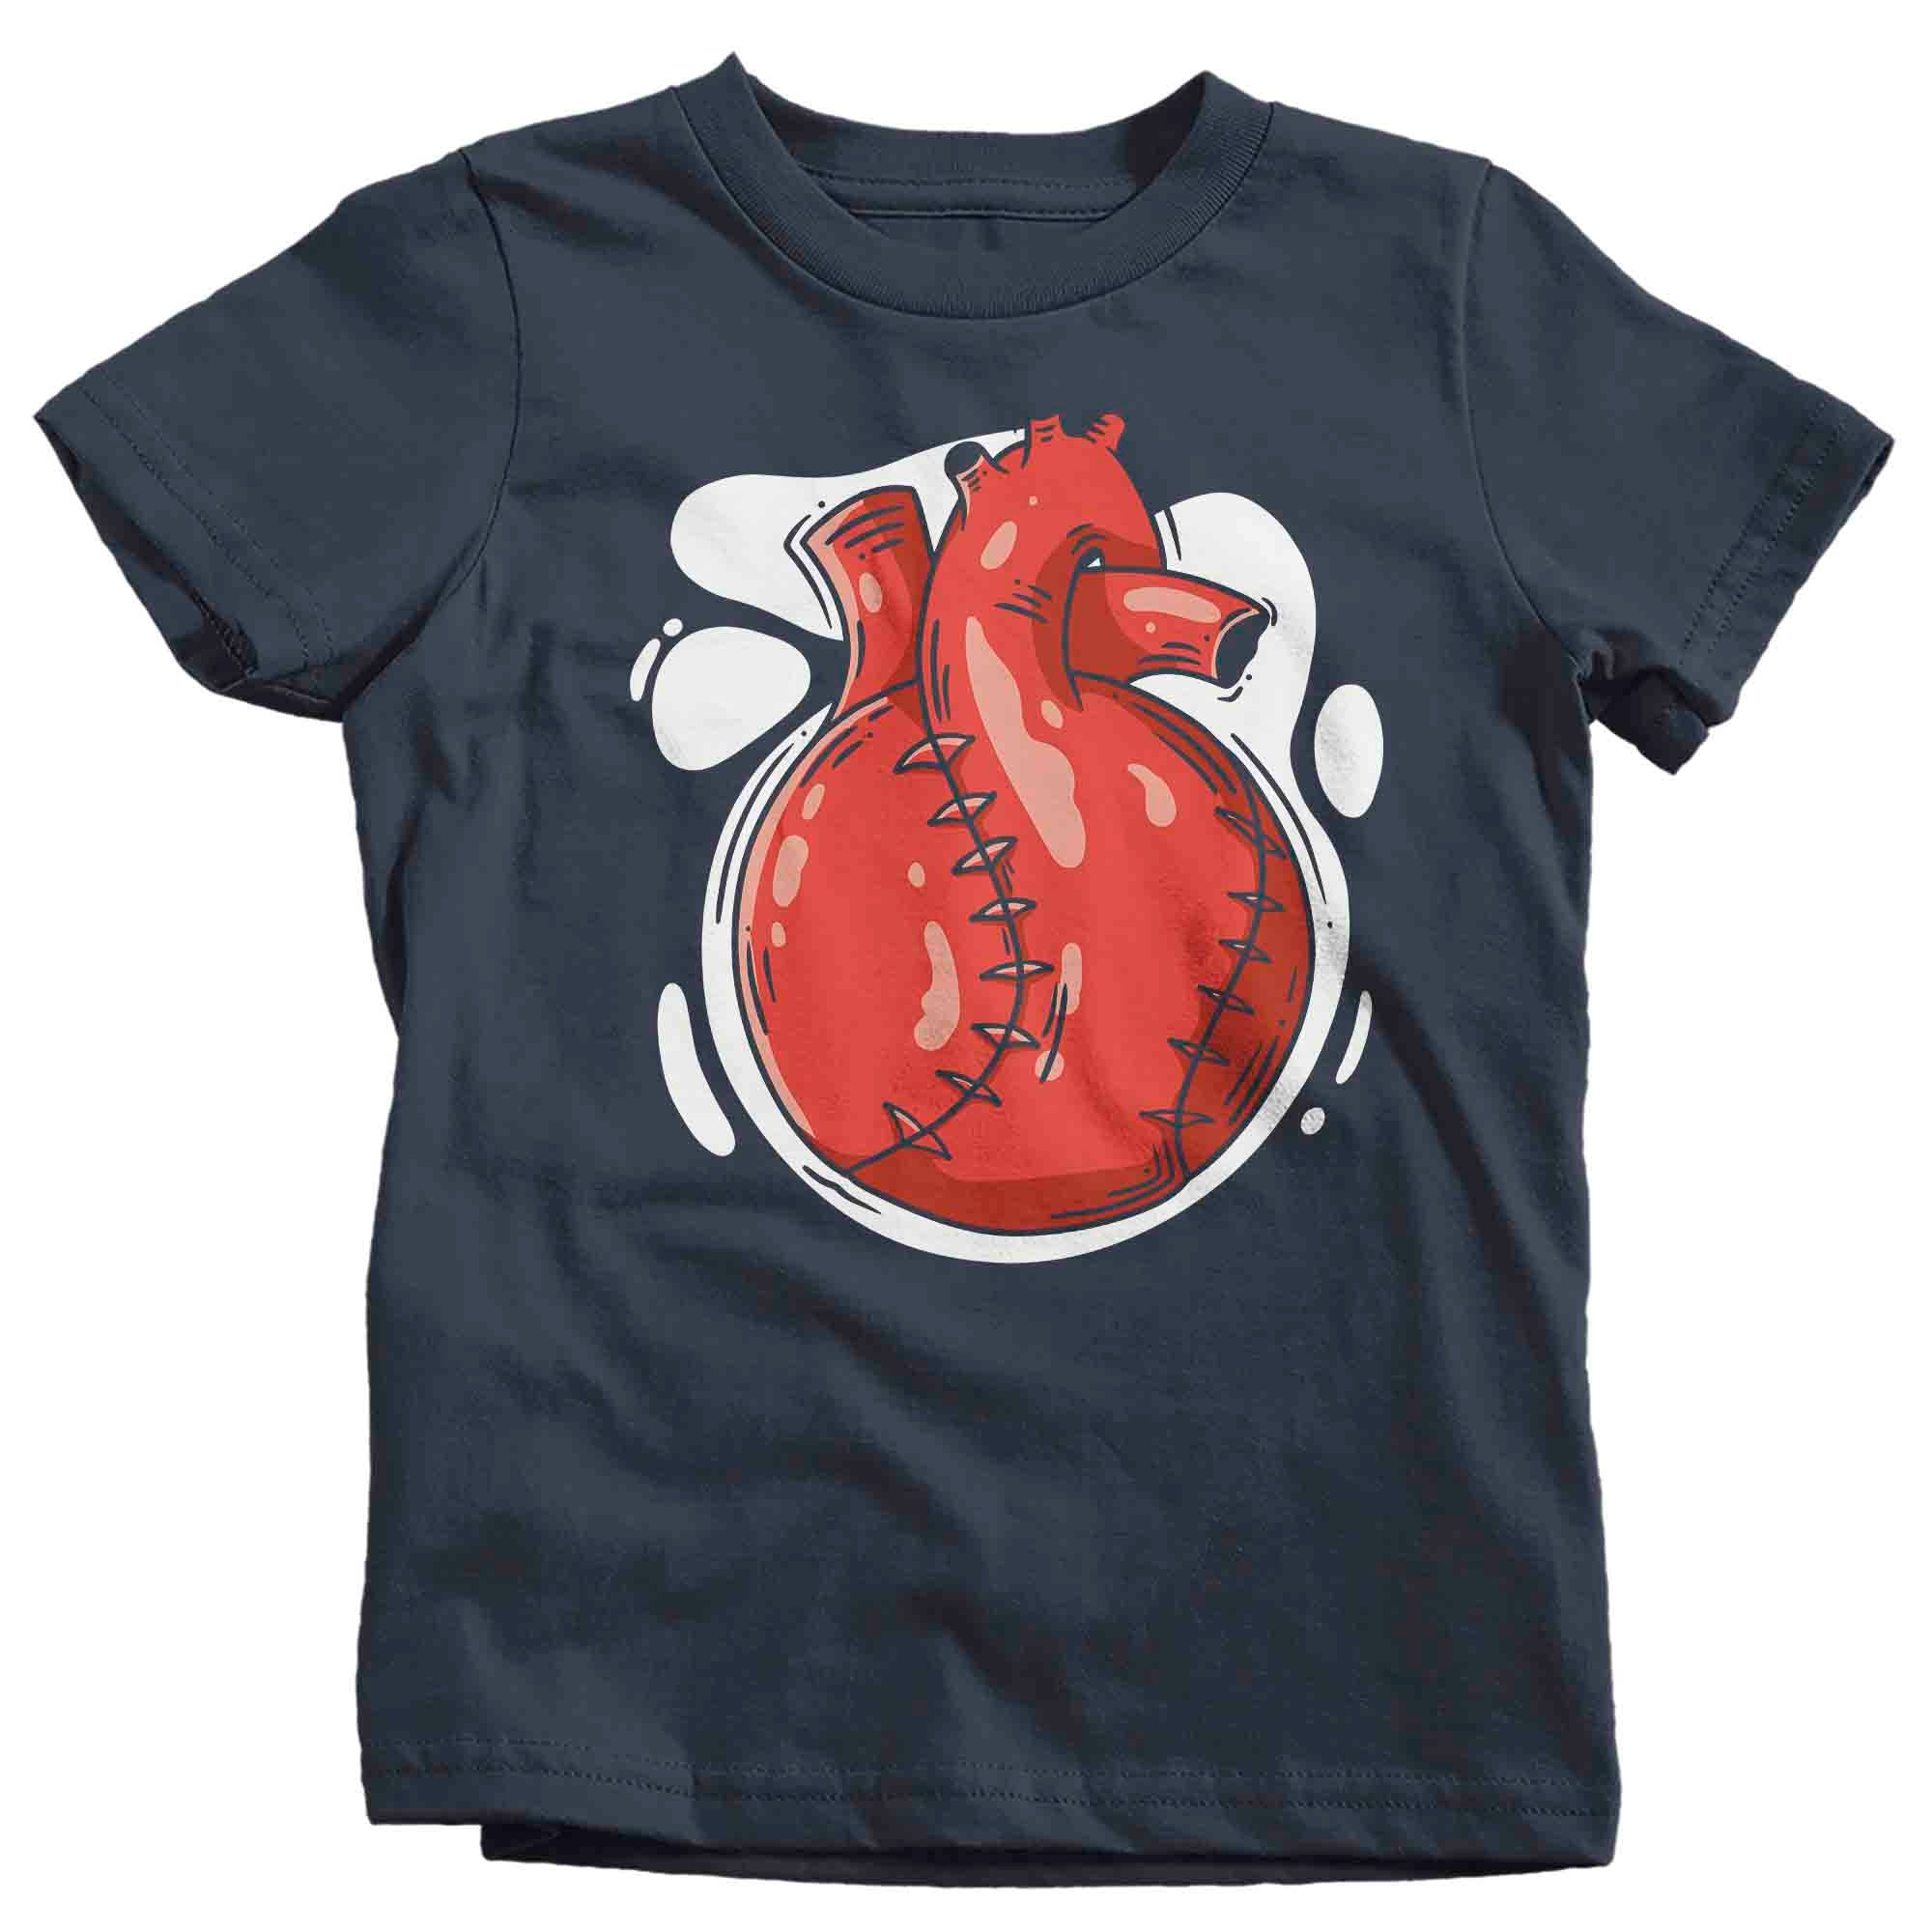 Kids Baseball T Shirt Funny Softball Shirt Heartbeat Heart Bleed